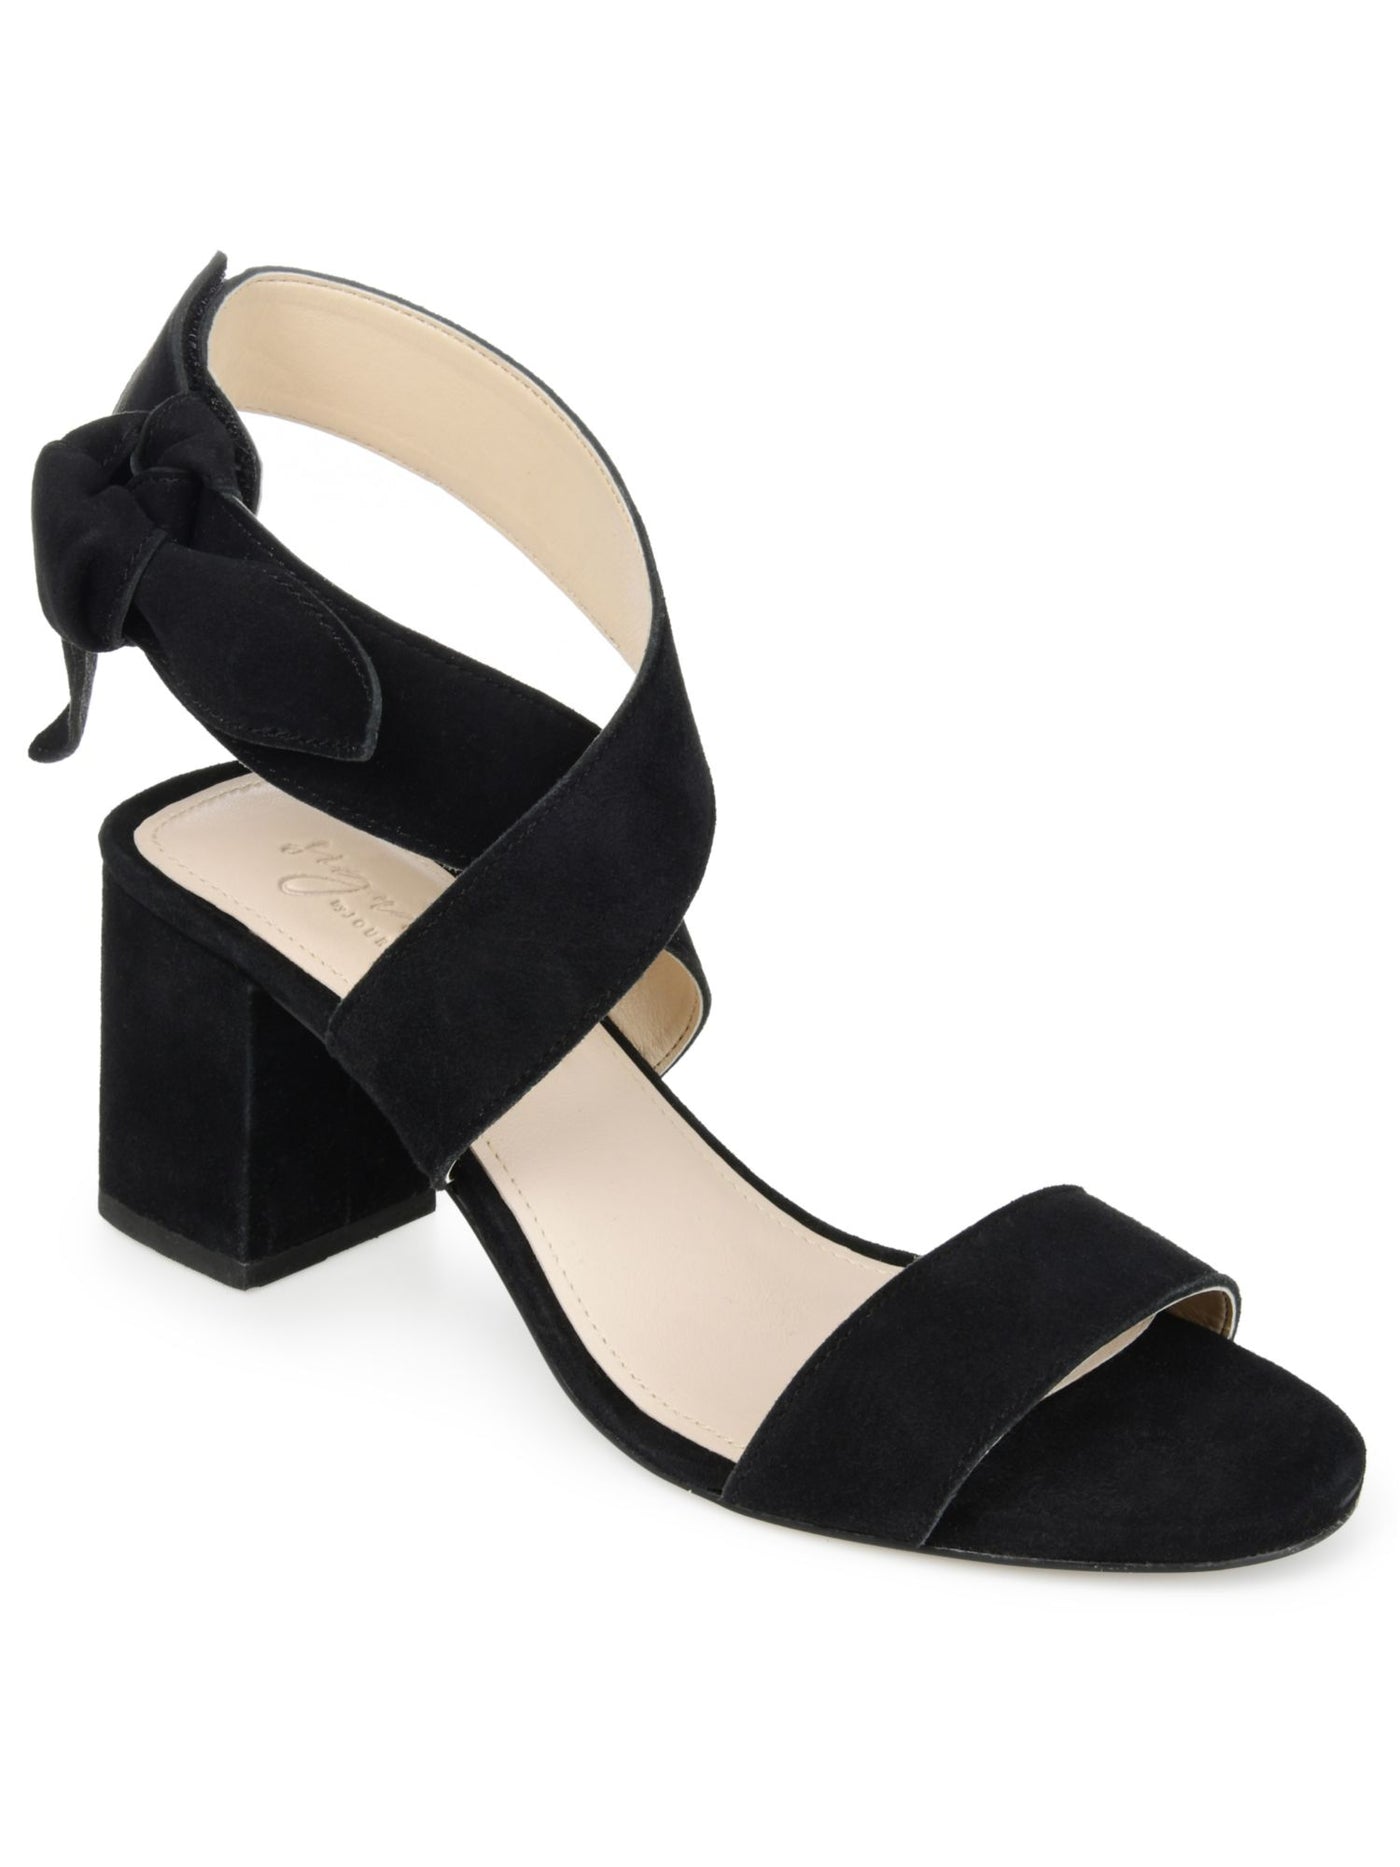 JOURNEE SIGNATURE Womens Black Cushioned Hether Open Toe Block Heel Leather Dress Heeled Sandal 8.5